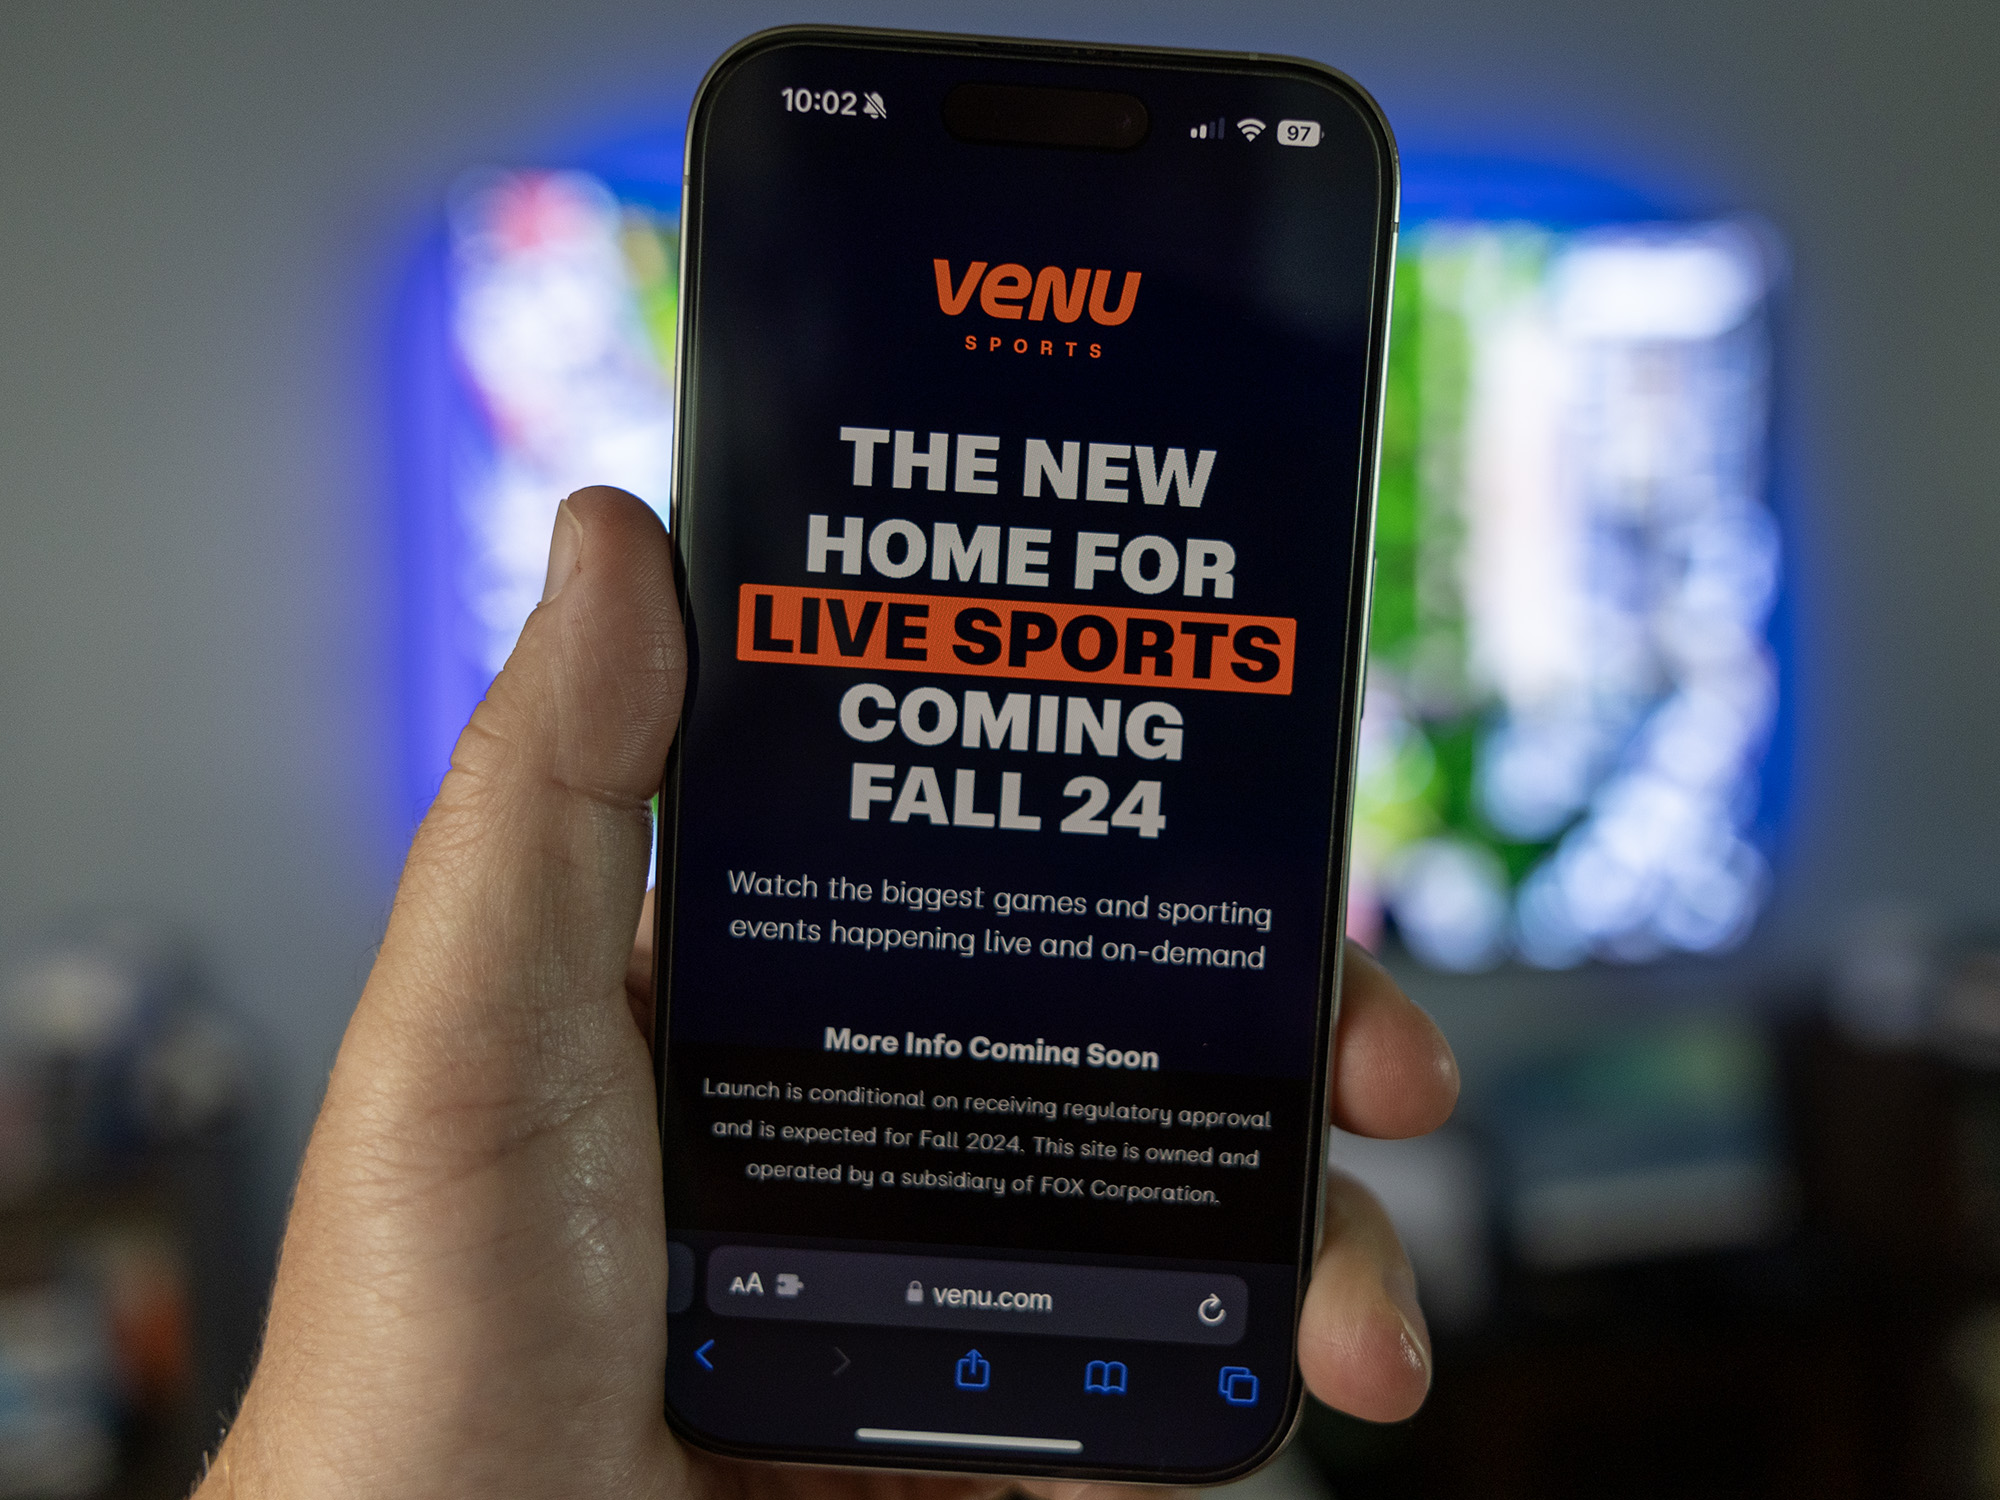 The Venu Sports website as seen on an iPhone.